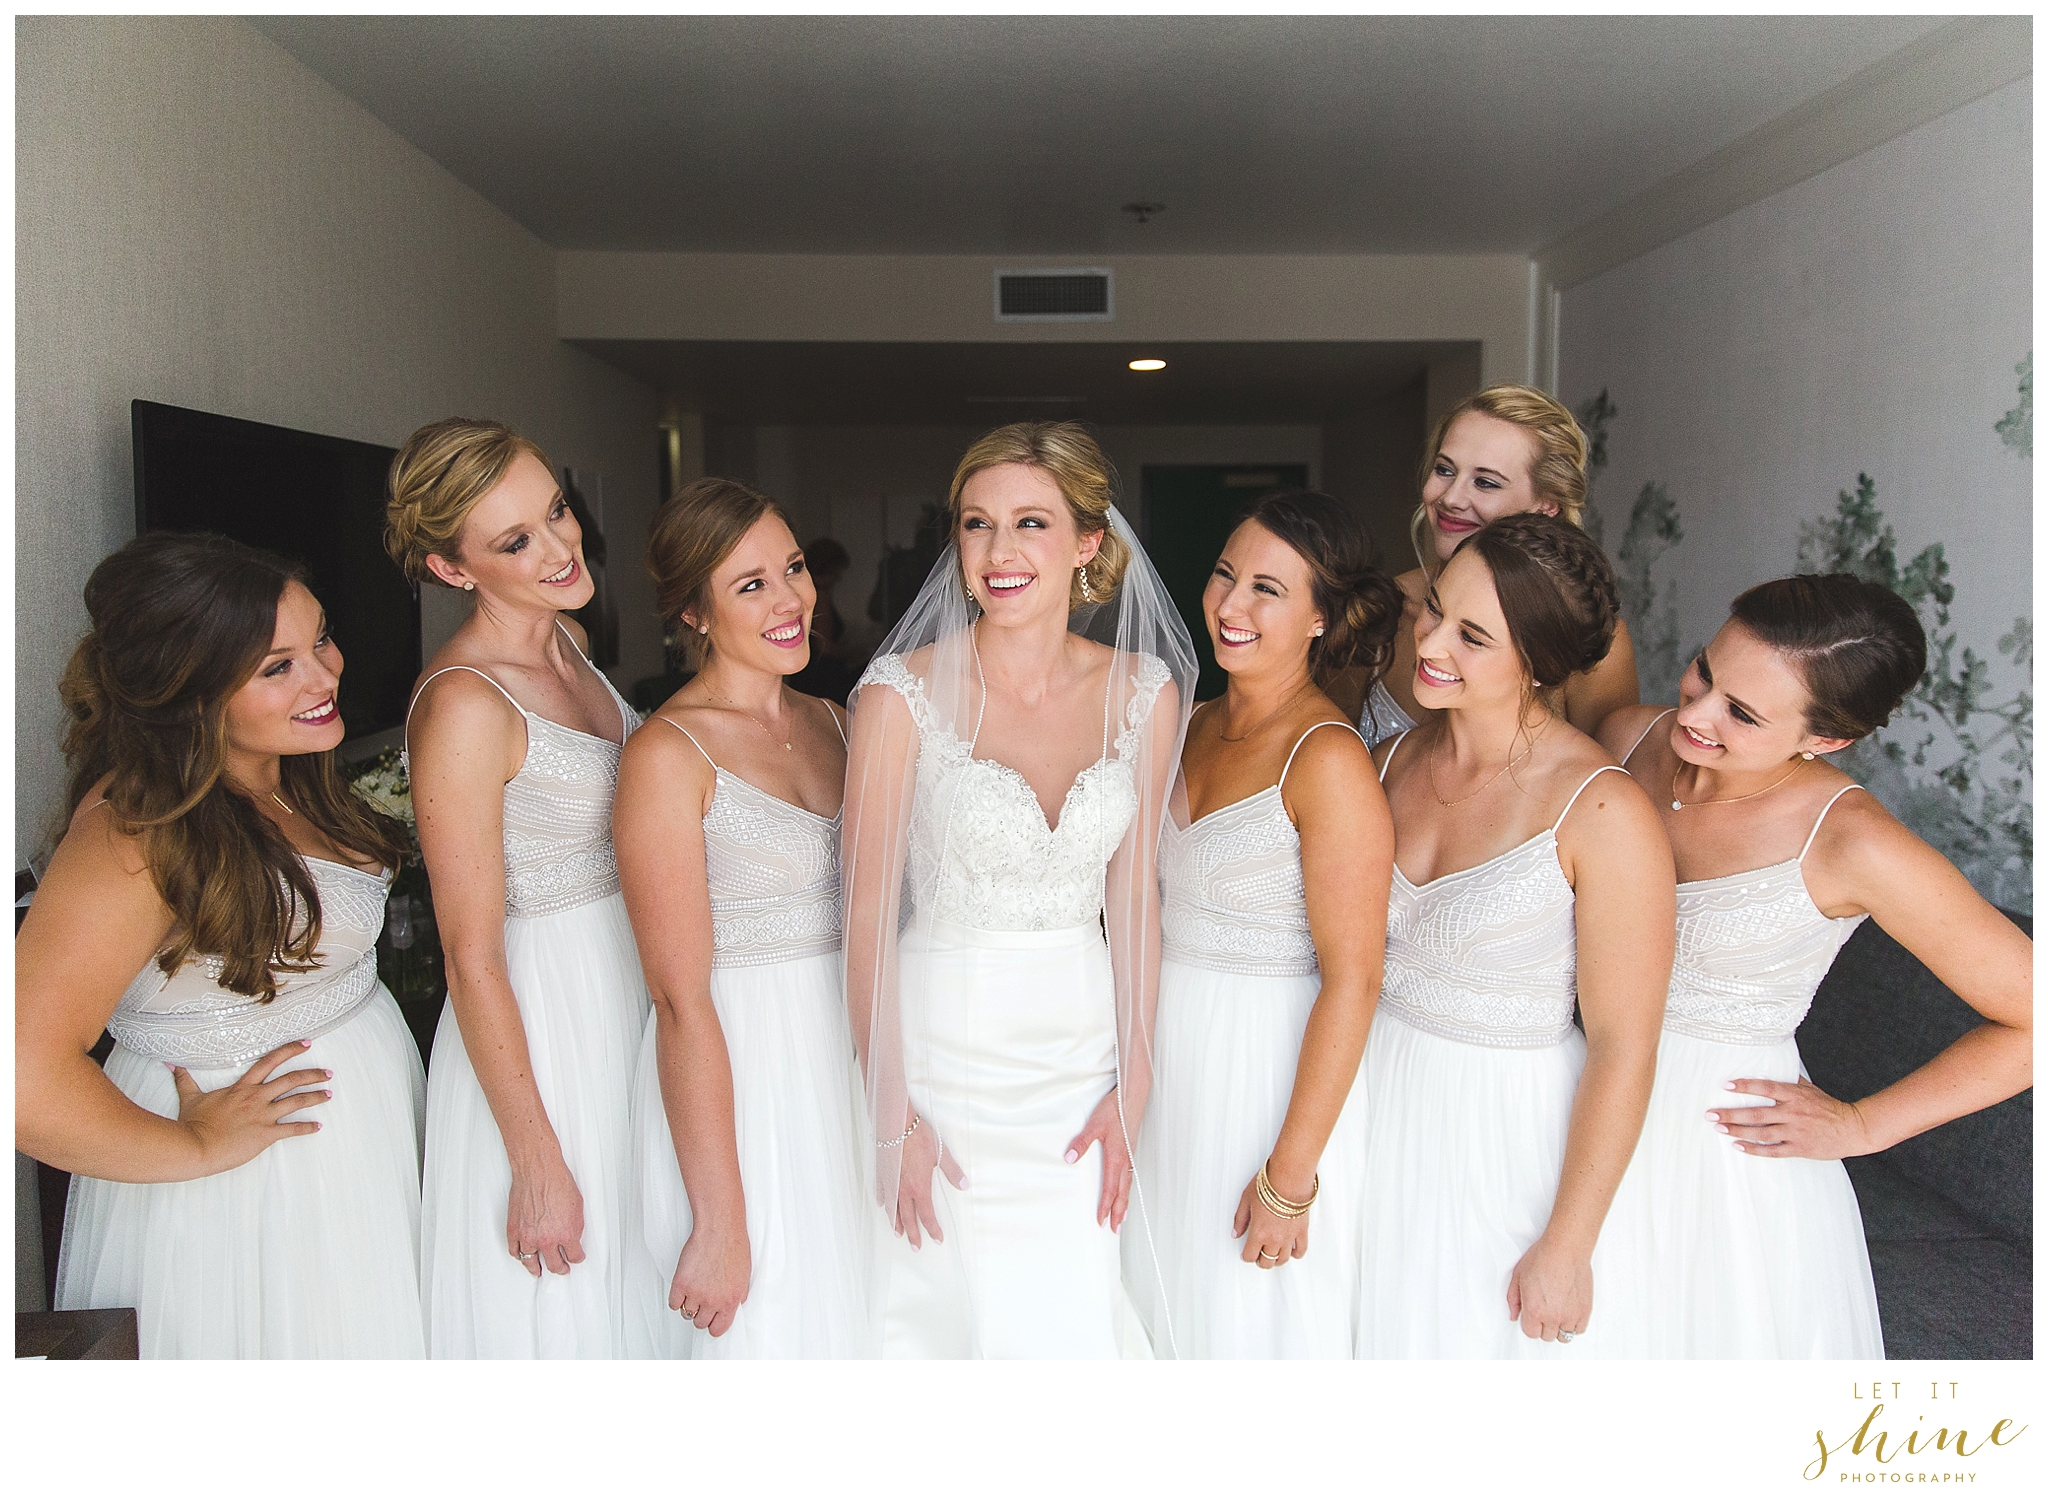 The Grove Hotel Boise Wedding 2017 Let it Shine Photography-8458.jpg